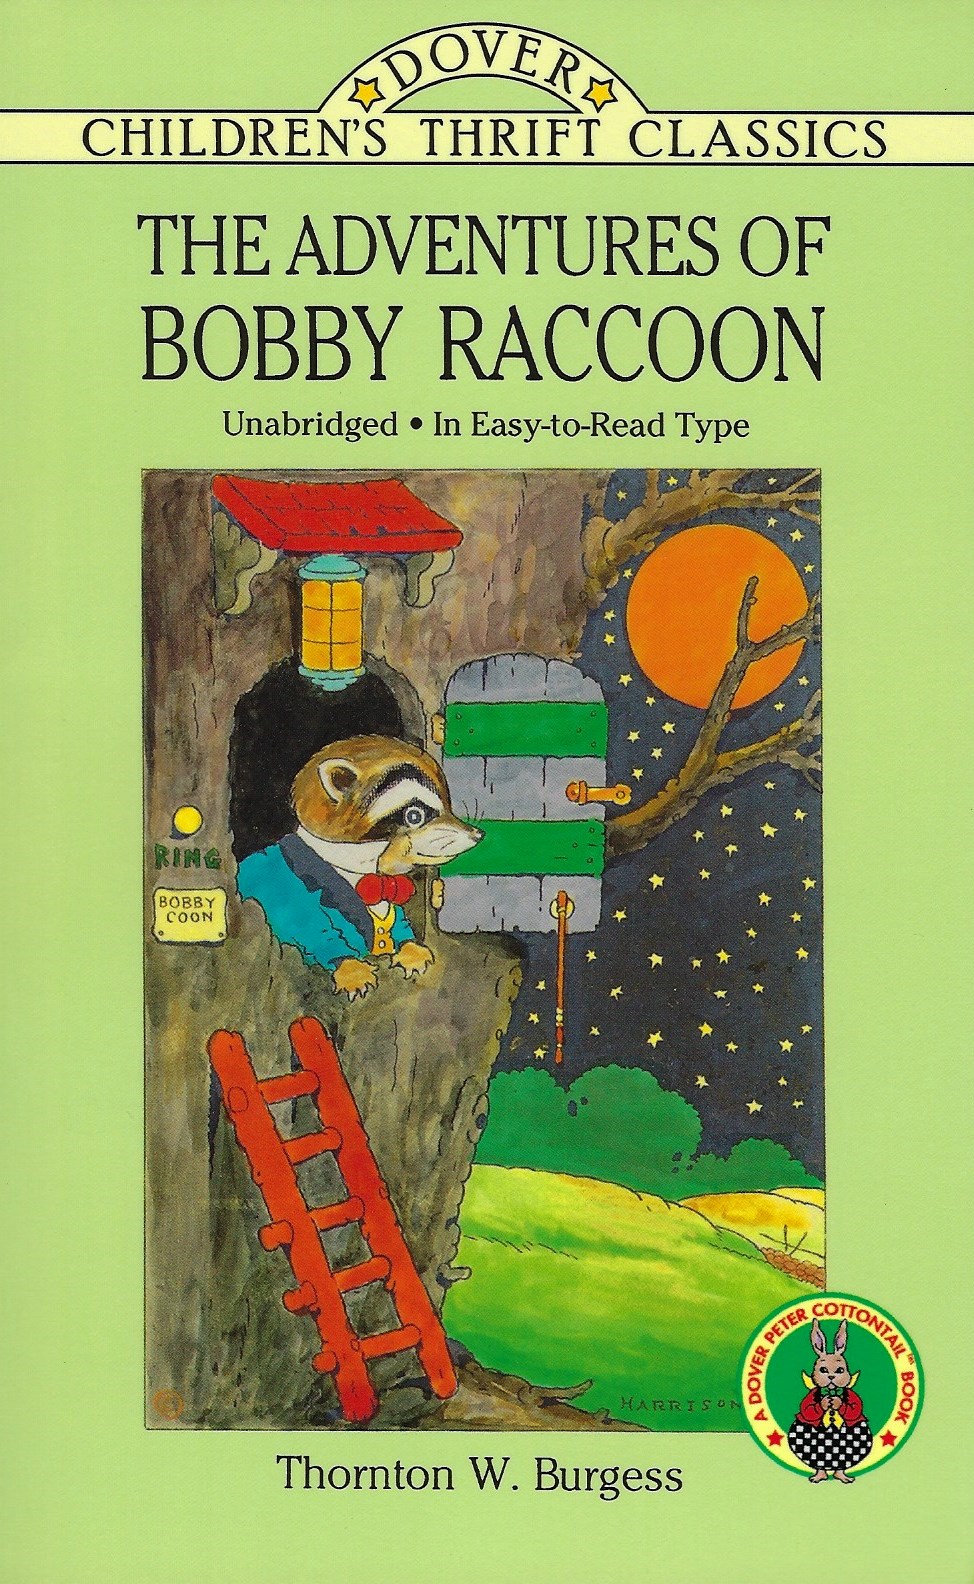 THE ADVENTURES OF BOBBY RACCOON Thornton W. Burgess